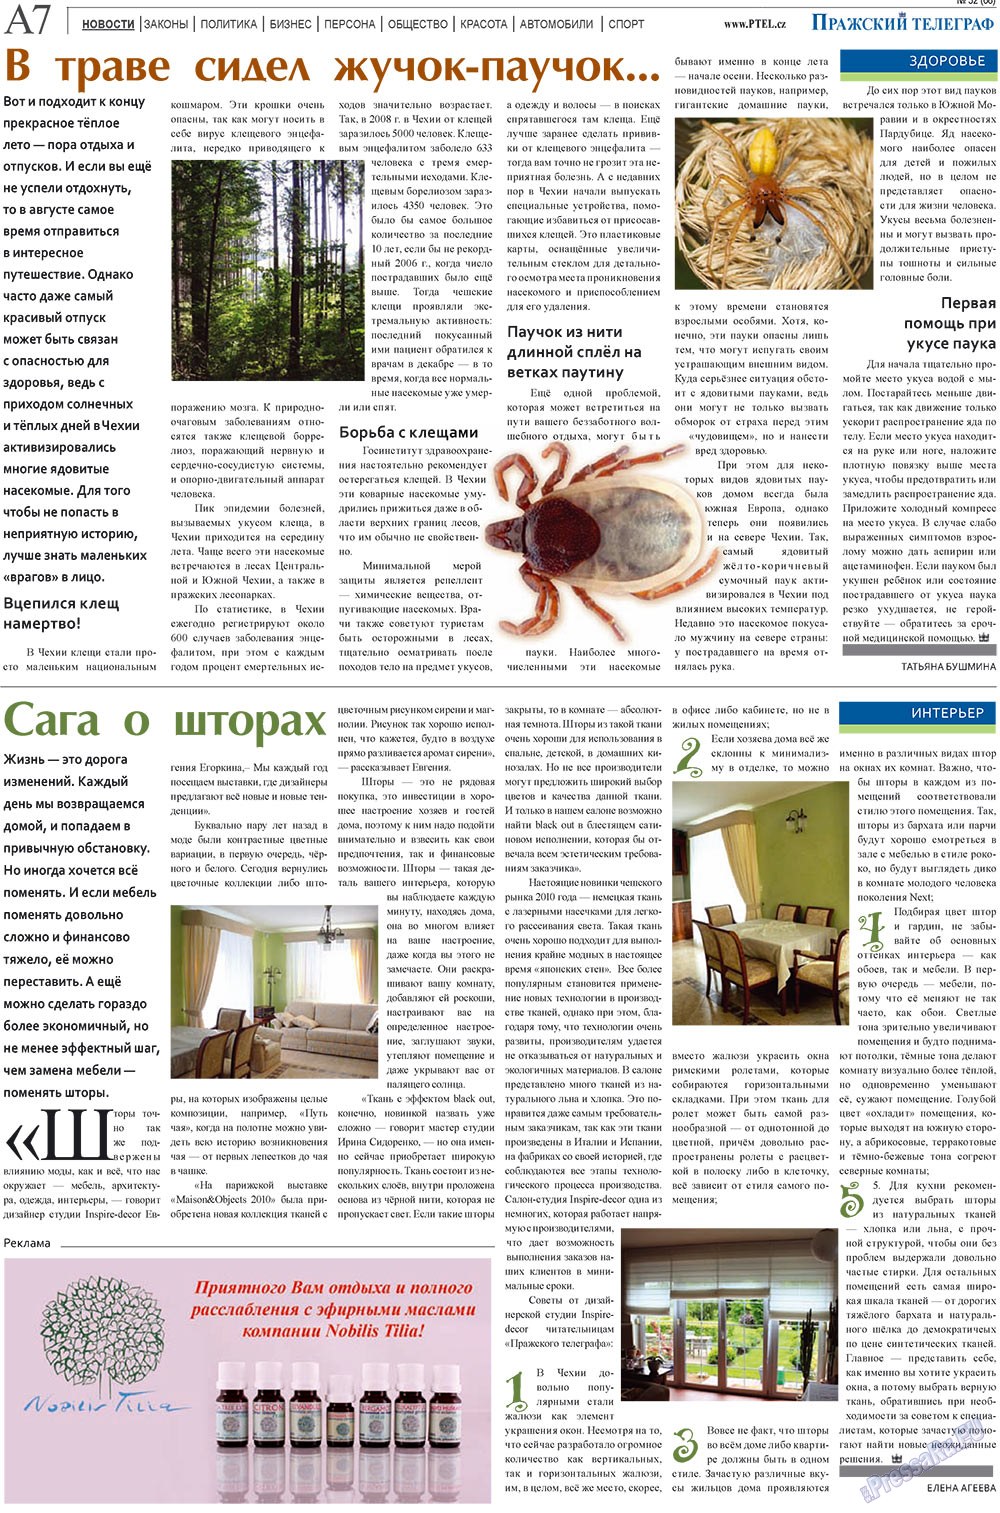 Пражский телеграф, газета. 2010 №32 стр.7